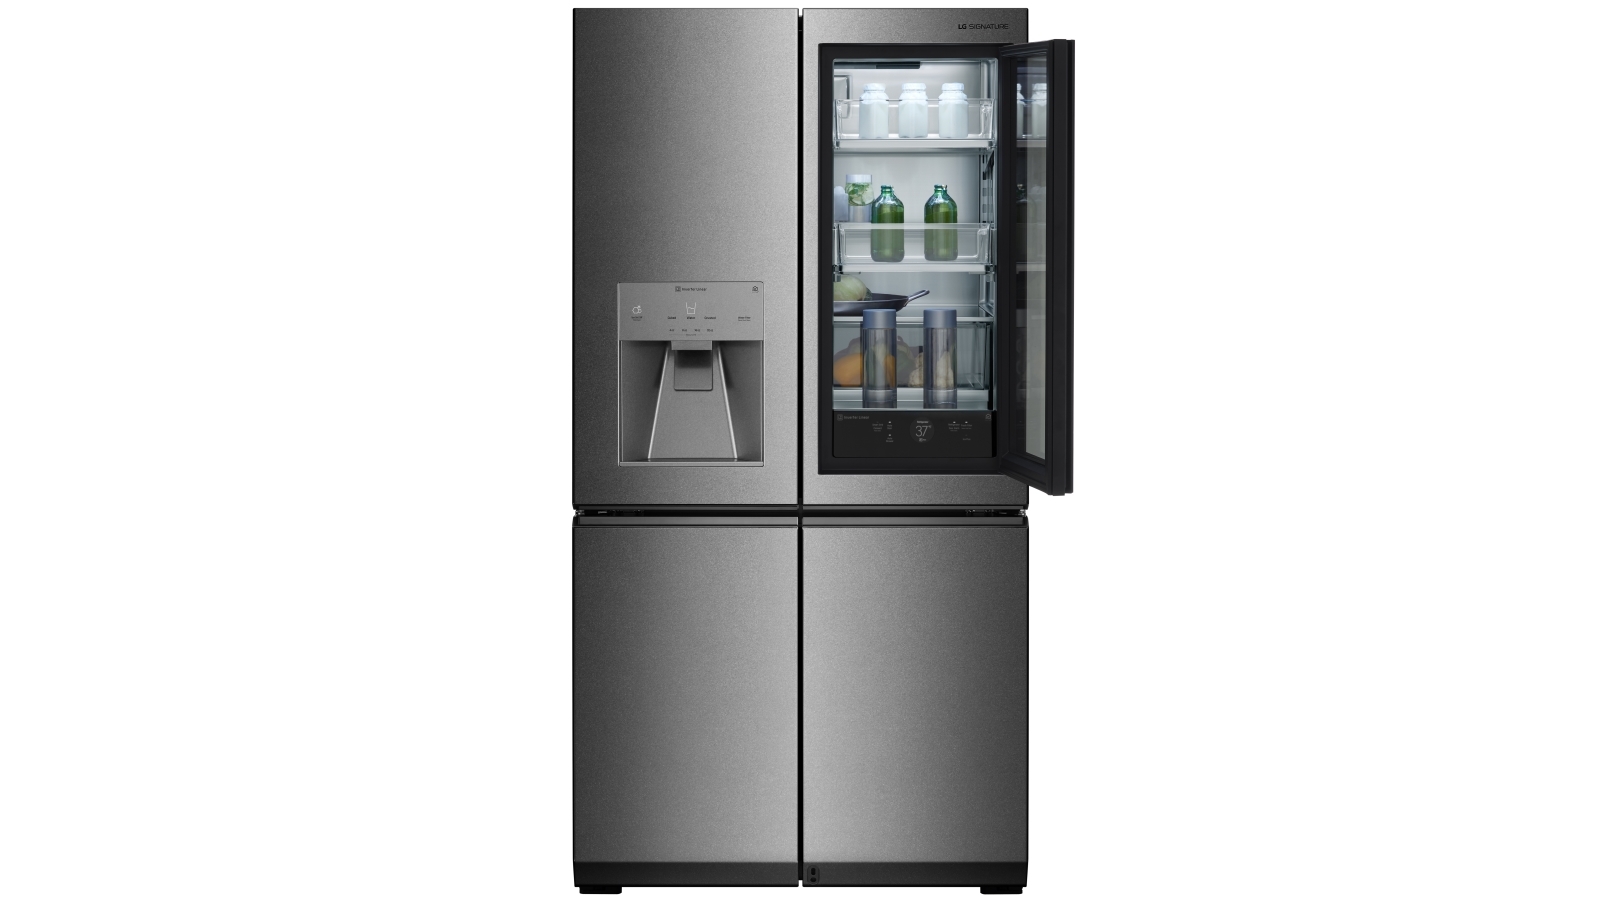 43+ Lg instaview fridge singapore information